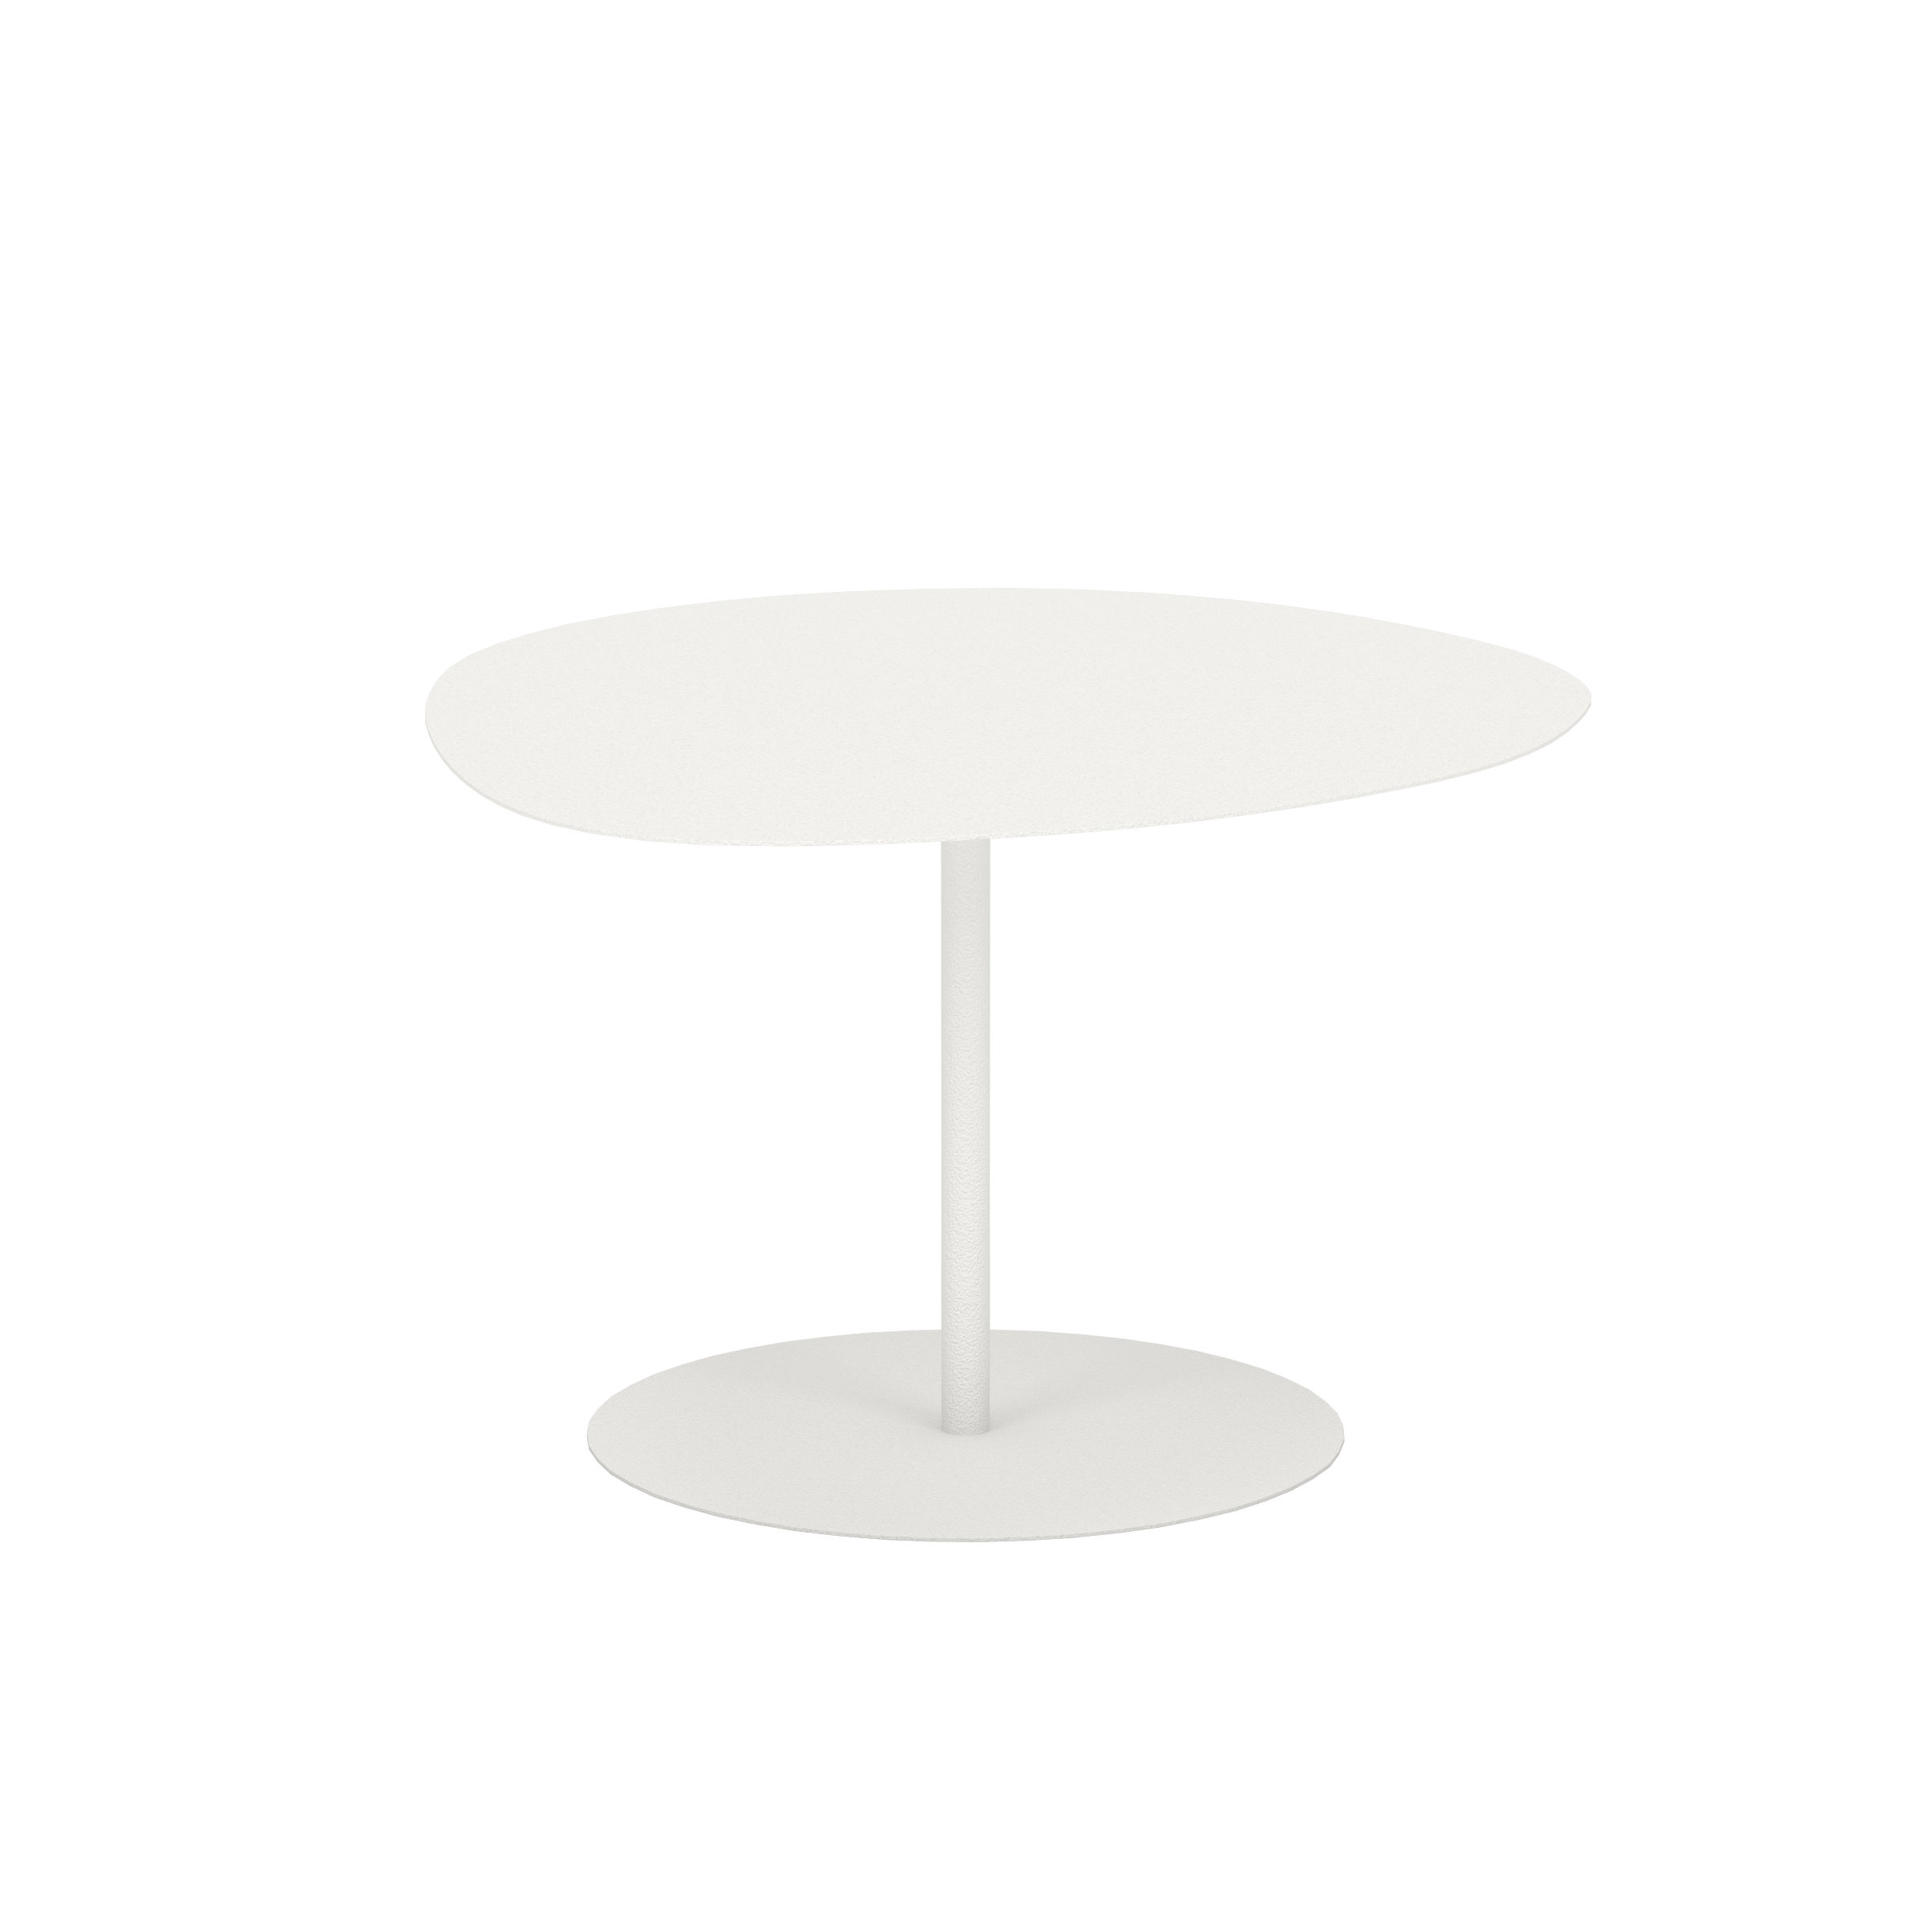 Table basse Galet n°1 INDOOR / 59 x 63 x H 40 cm - Matière Grise blanc en métal